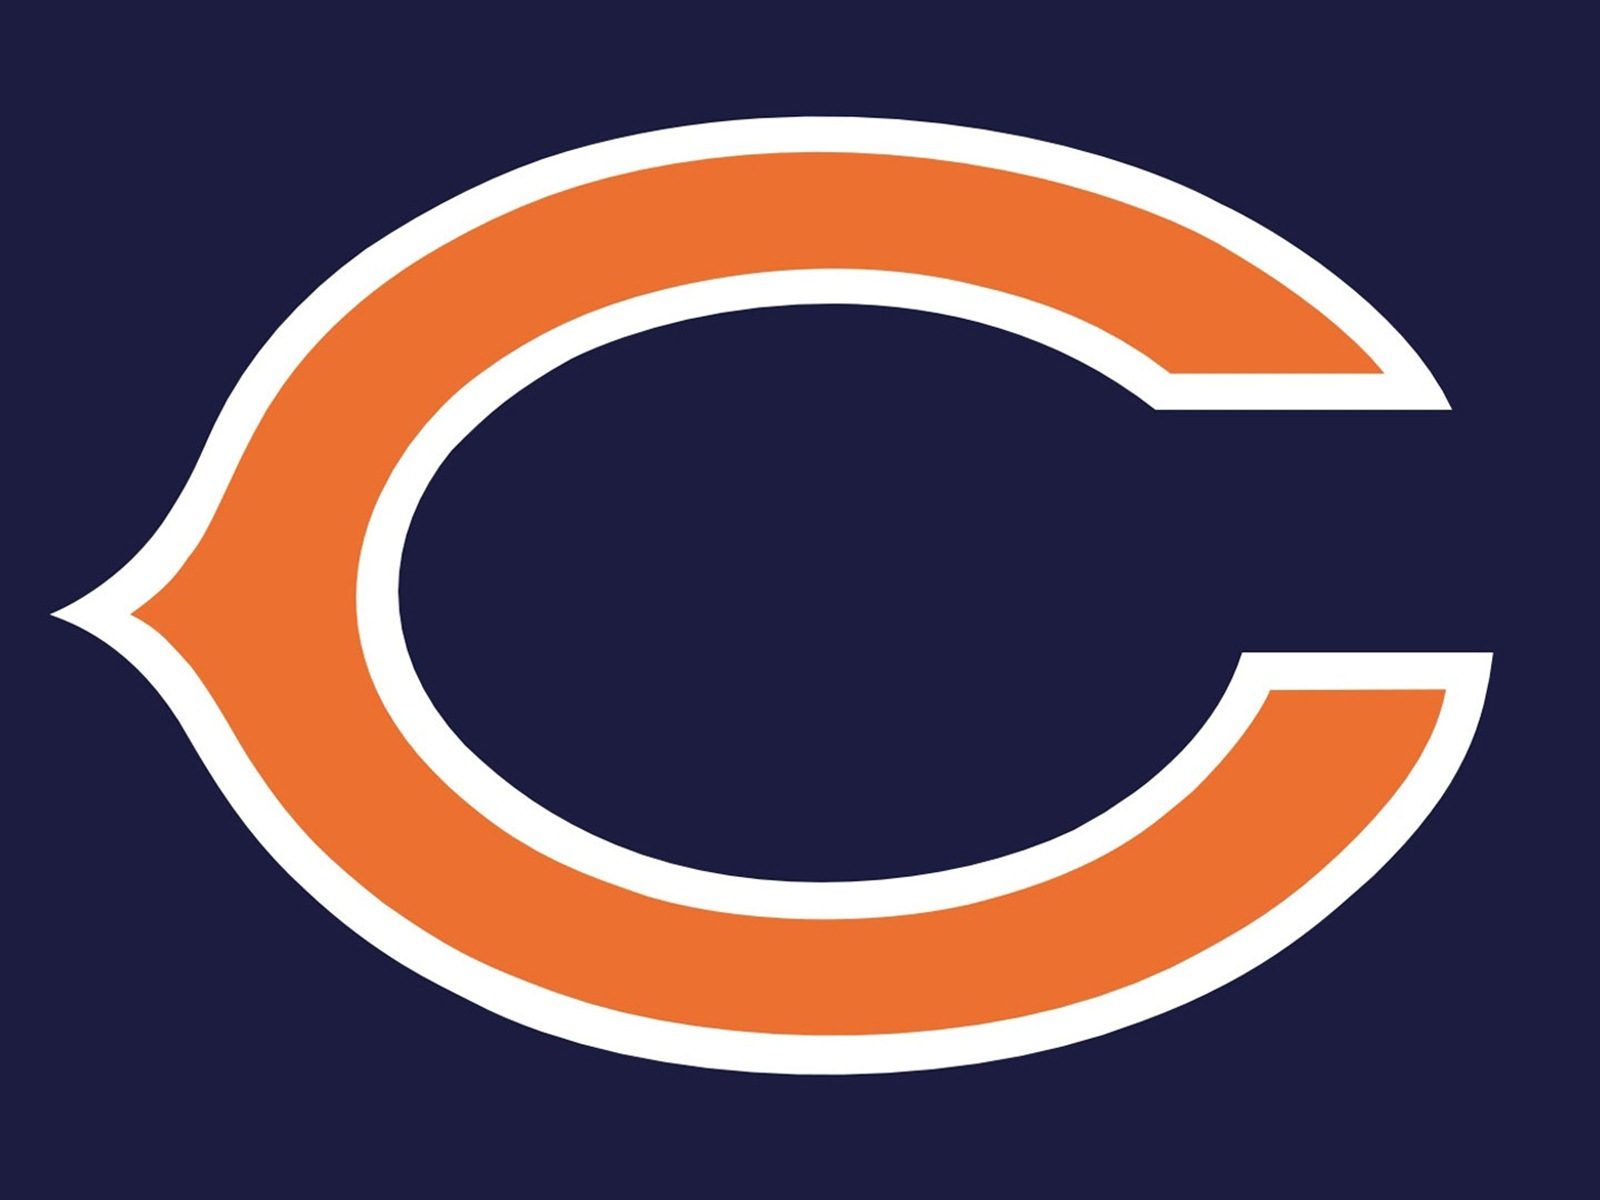 Chicago Bears trade